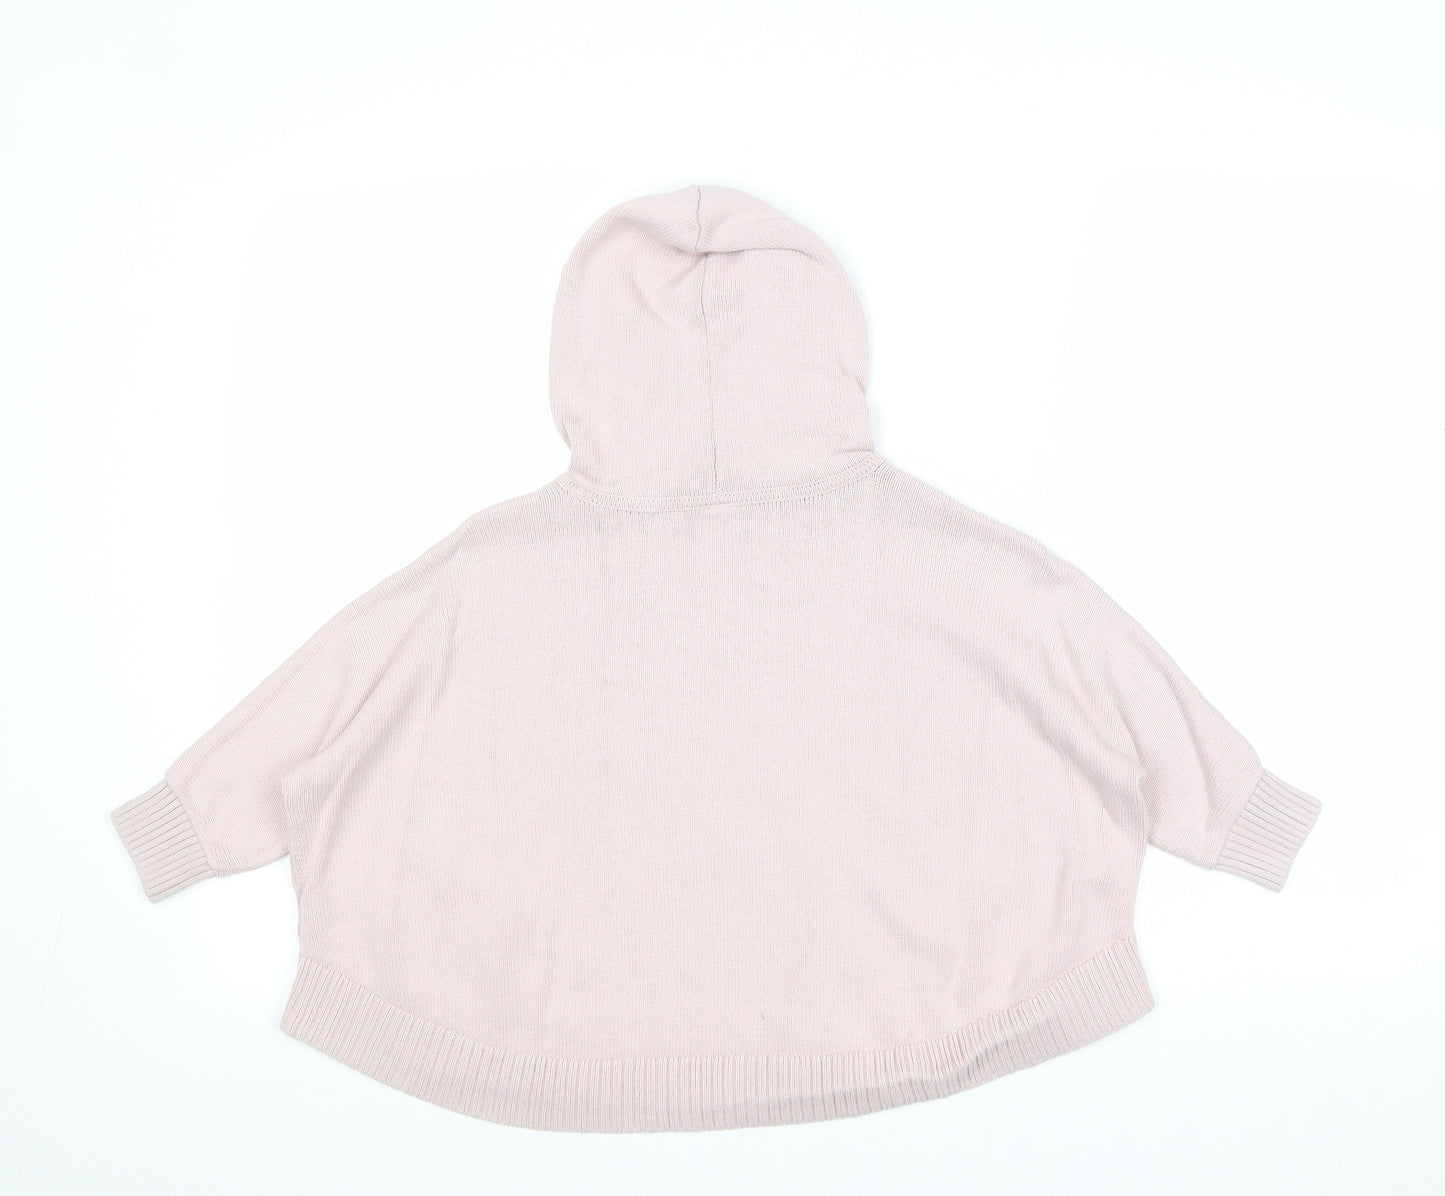 Gap Girls Pink Round Neck 100% Cotton Pullover Jumper Size 5 Years Pullover - Star Print